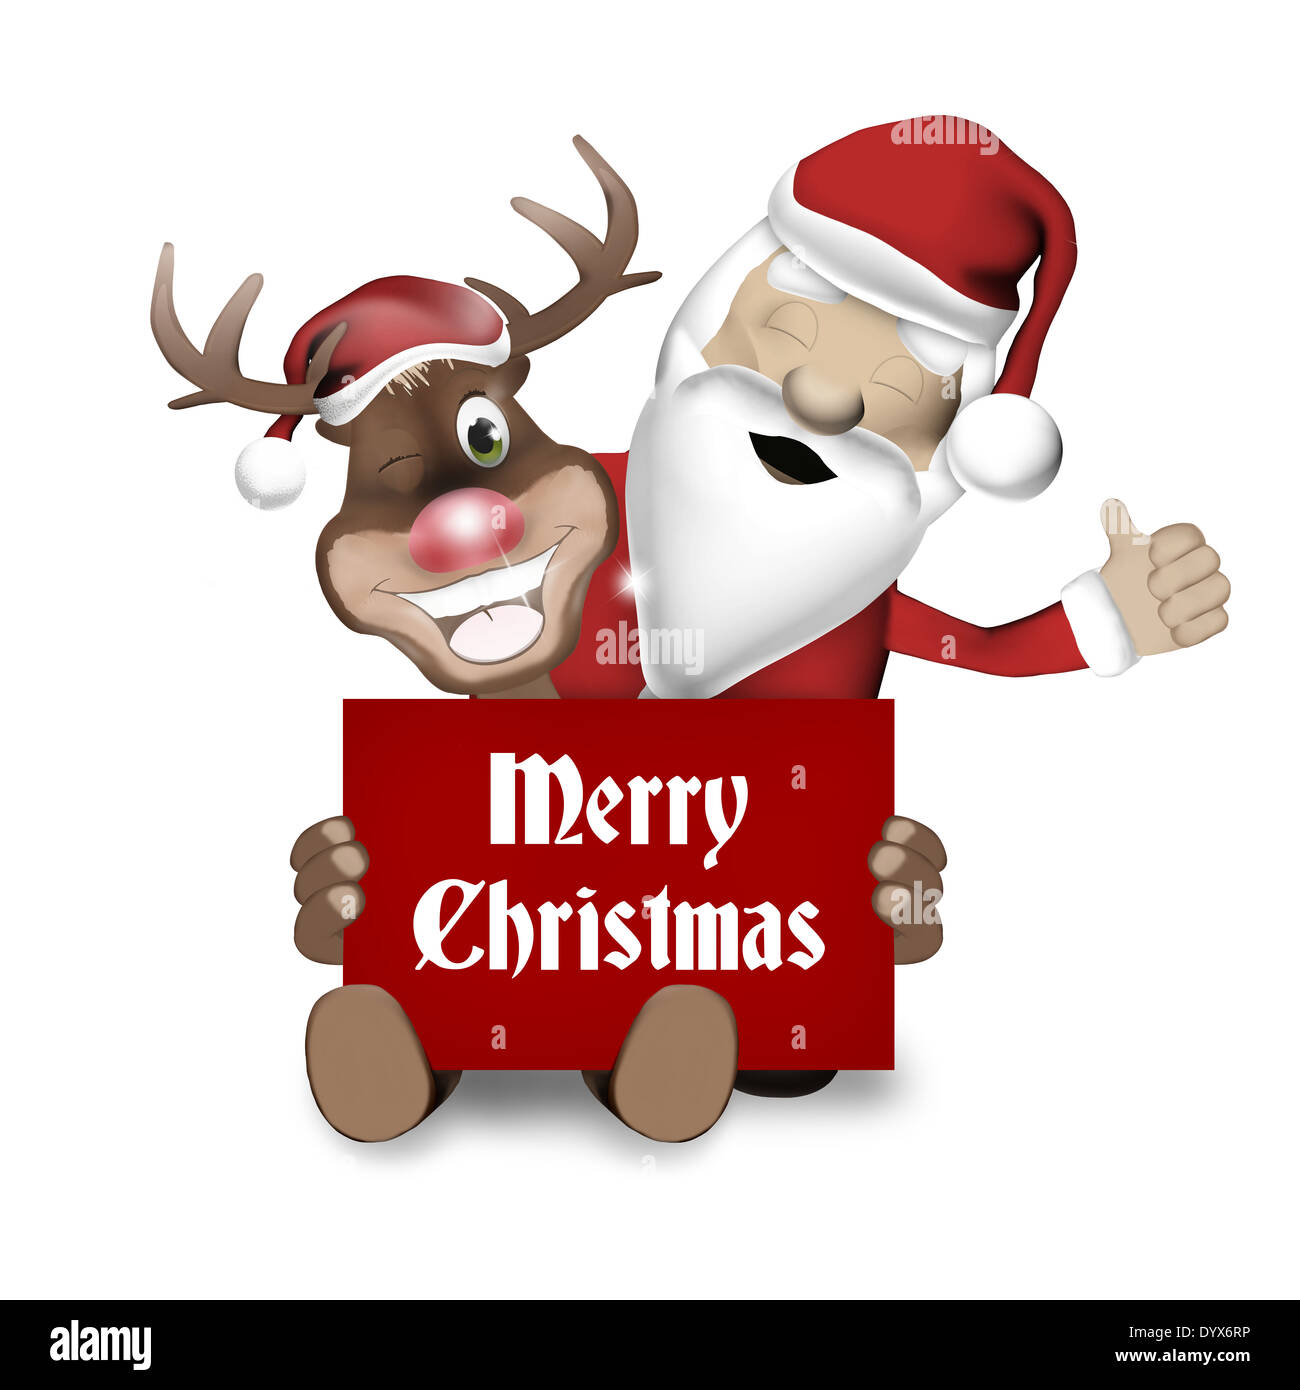 Santa Claus reindeer Stock Photo